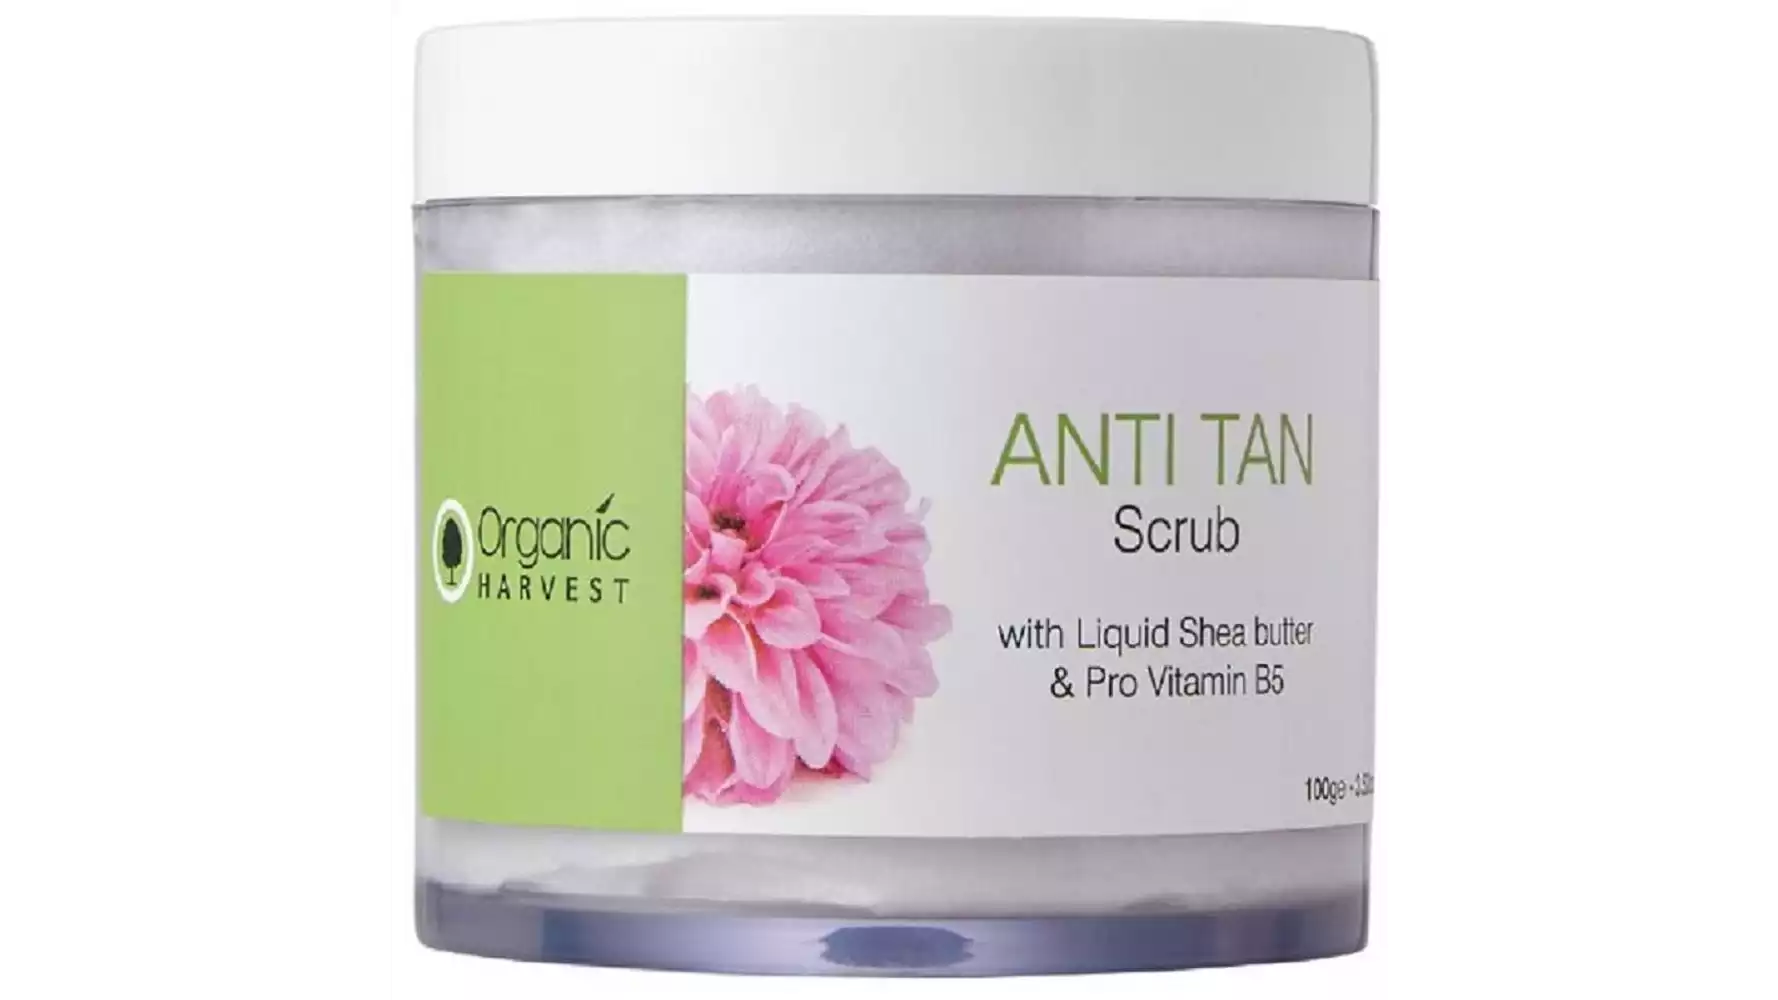 Organic Harvest Anti Tan Scrub (100g)